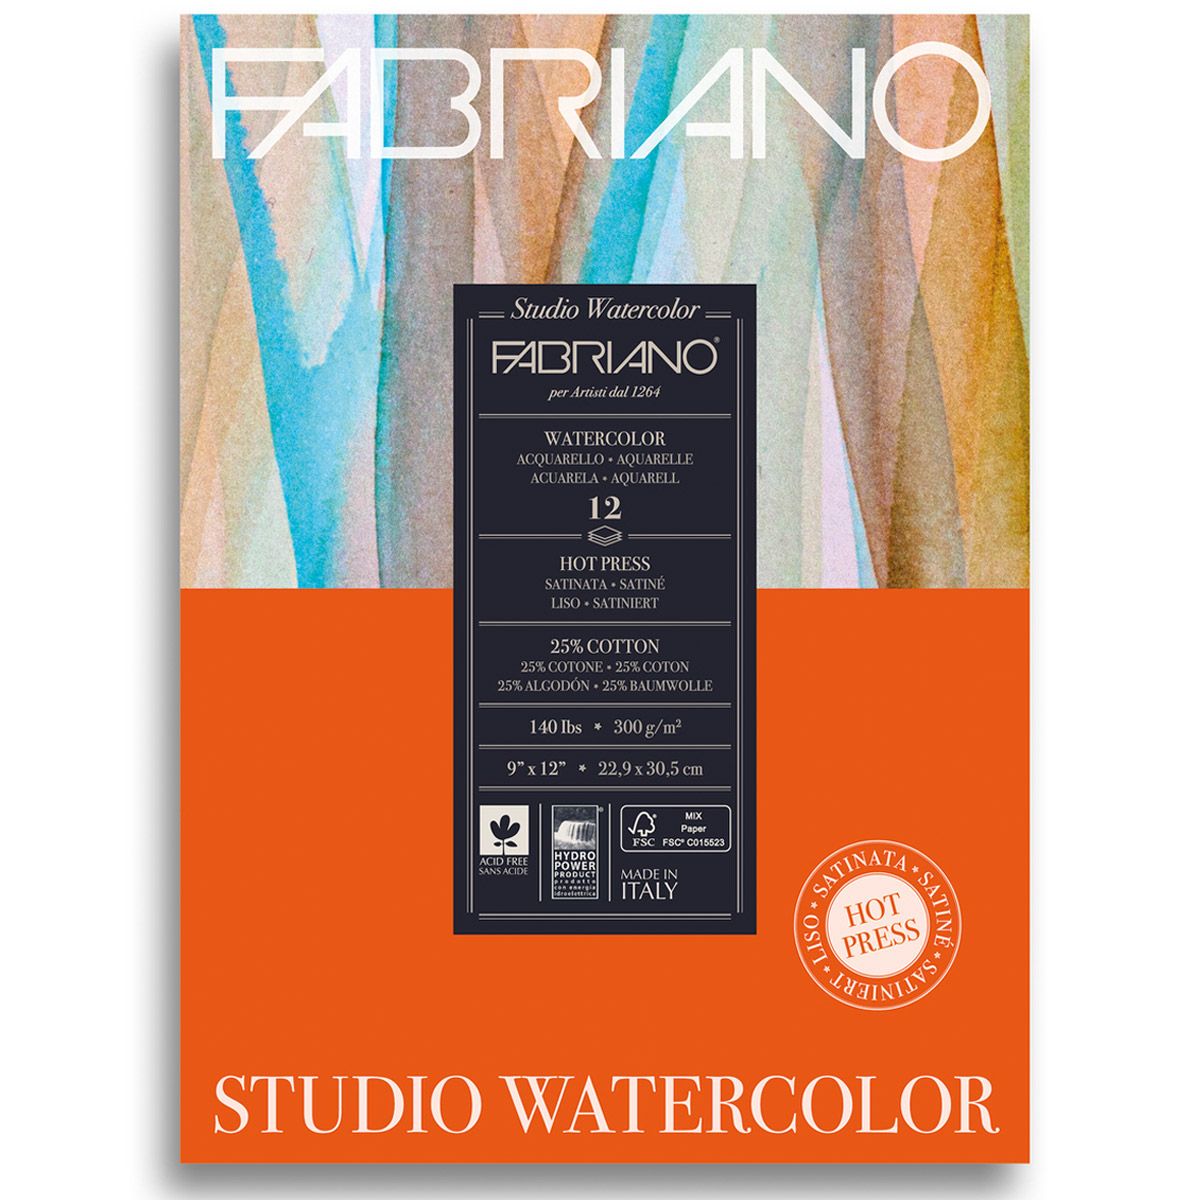 Fabriano Studio Watercolour Pad HP-20 sheets, 140lb 9x12 inch